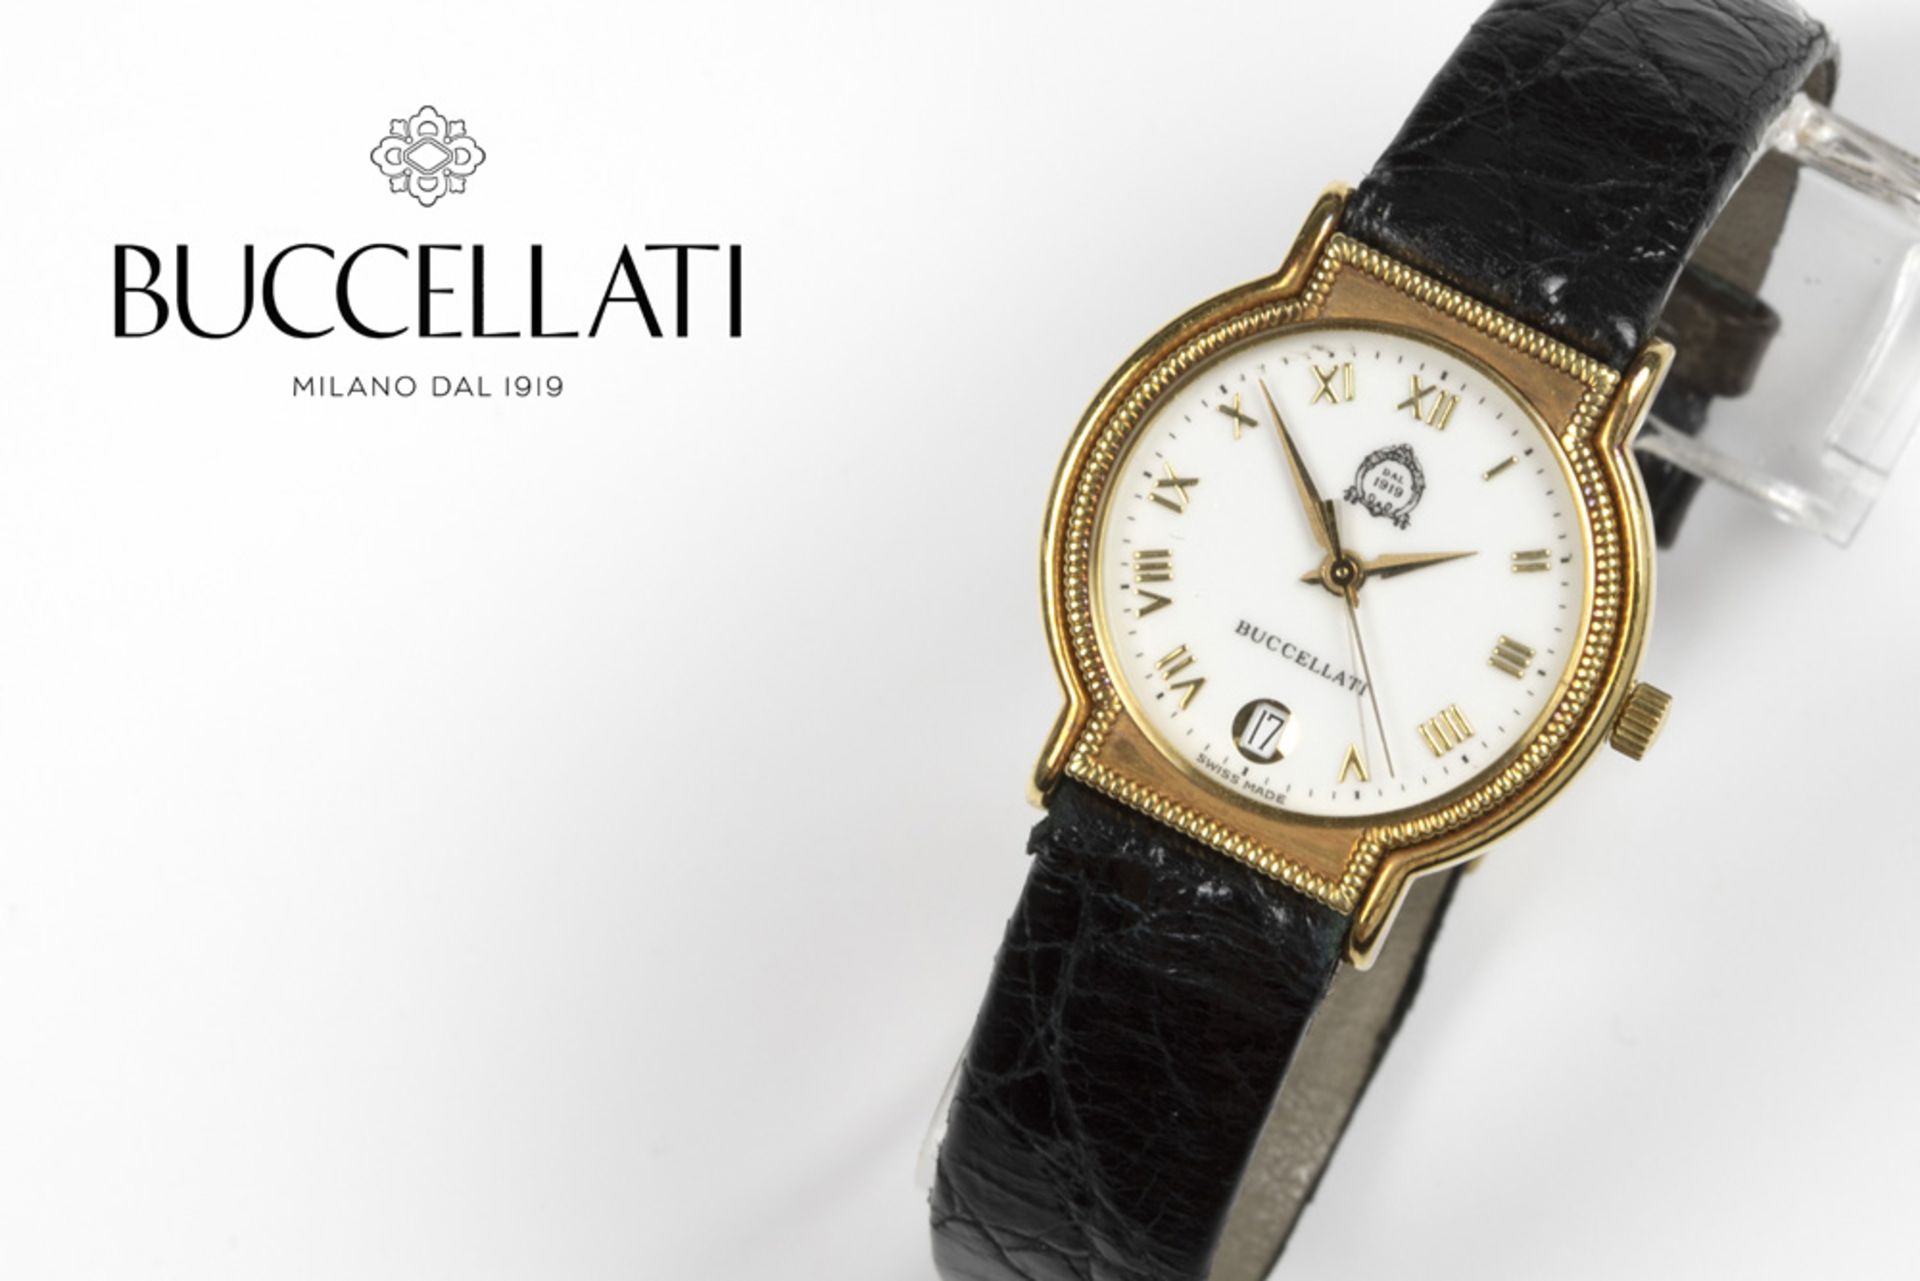 completely original Mario Buccellati marked quartz "Dal 1919" ladies' wristwatch (with date) in